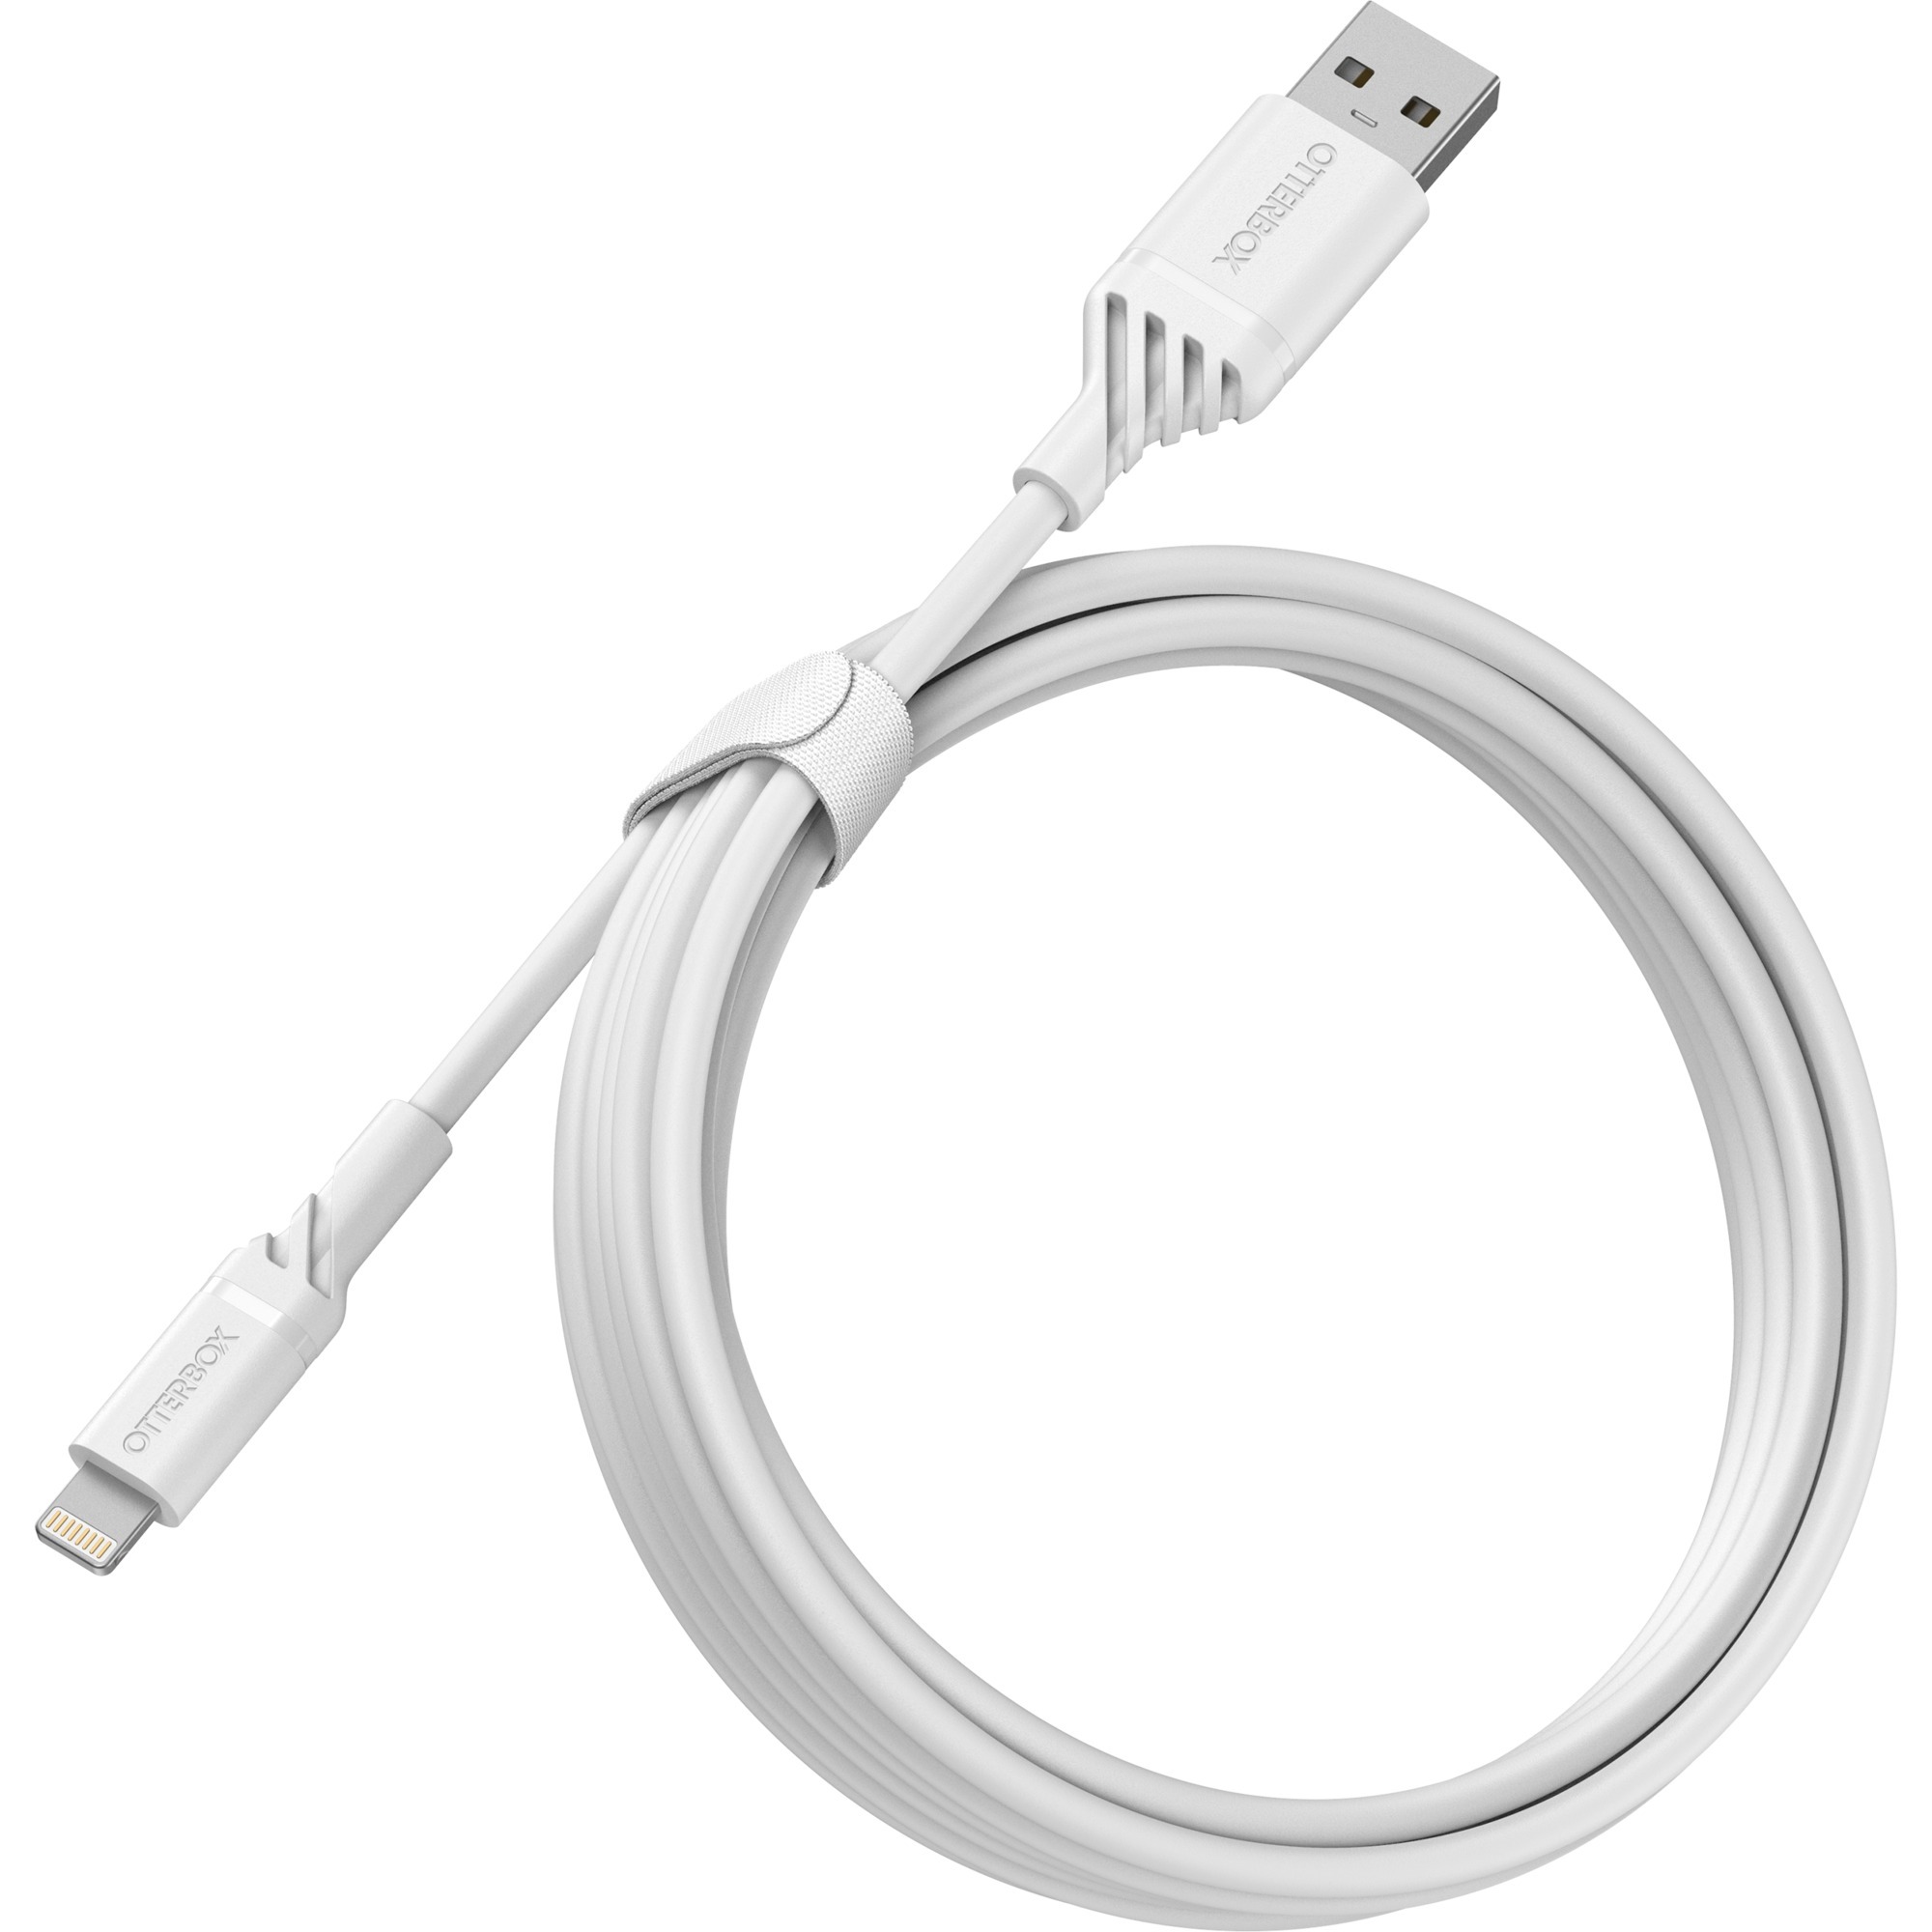 Image of Alternate - Ladekabel USB A > Lightning, 2 Meter online einkaufen bei Alternate